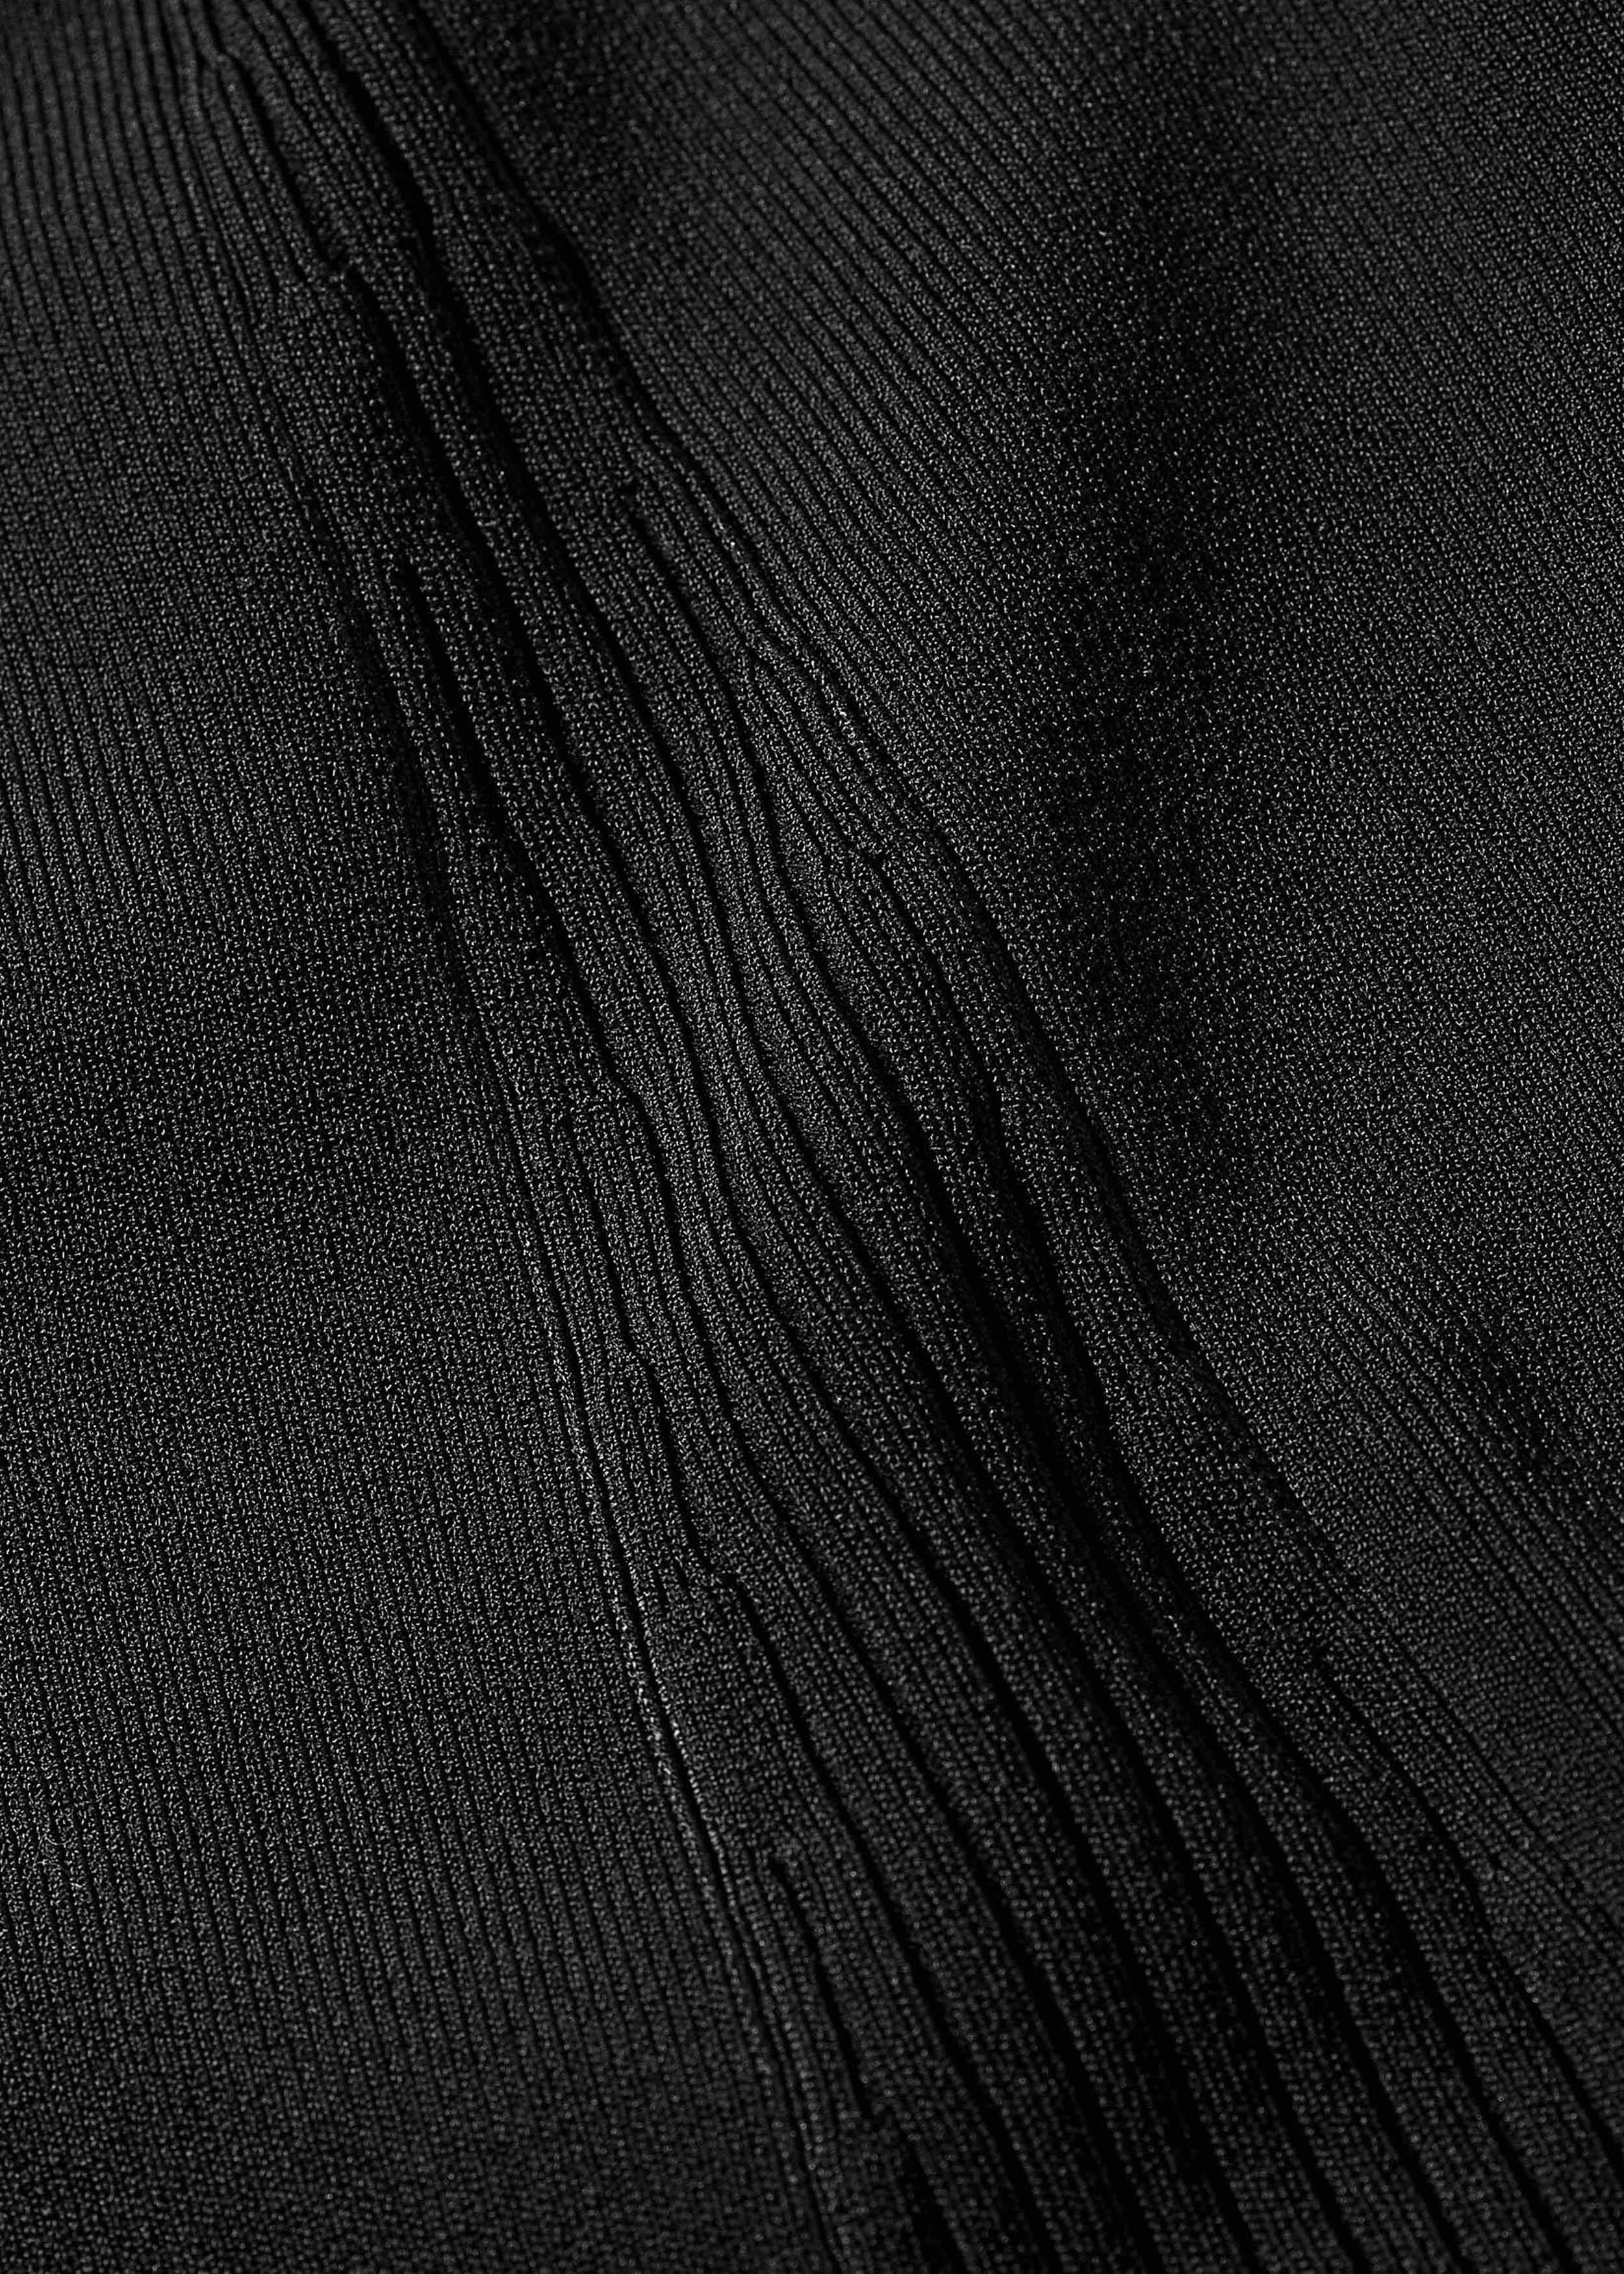 AM-PM Rayon Knit Fit + Flare Dress Black